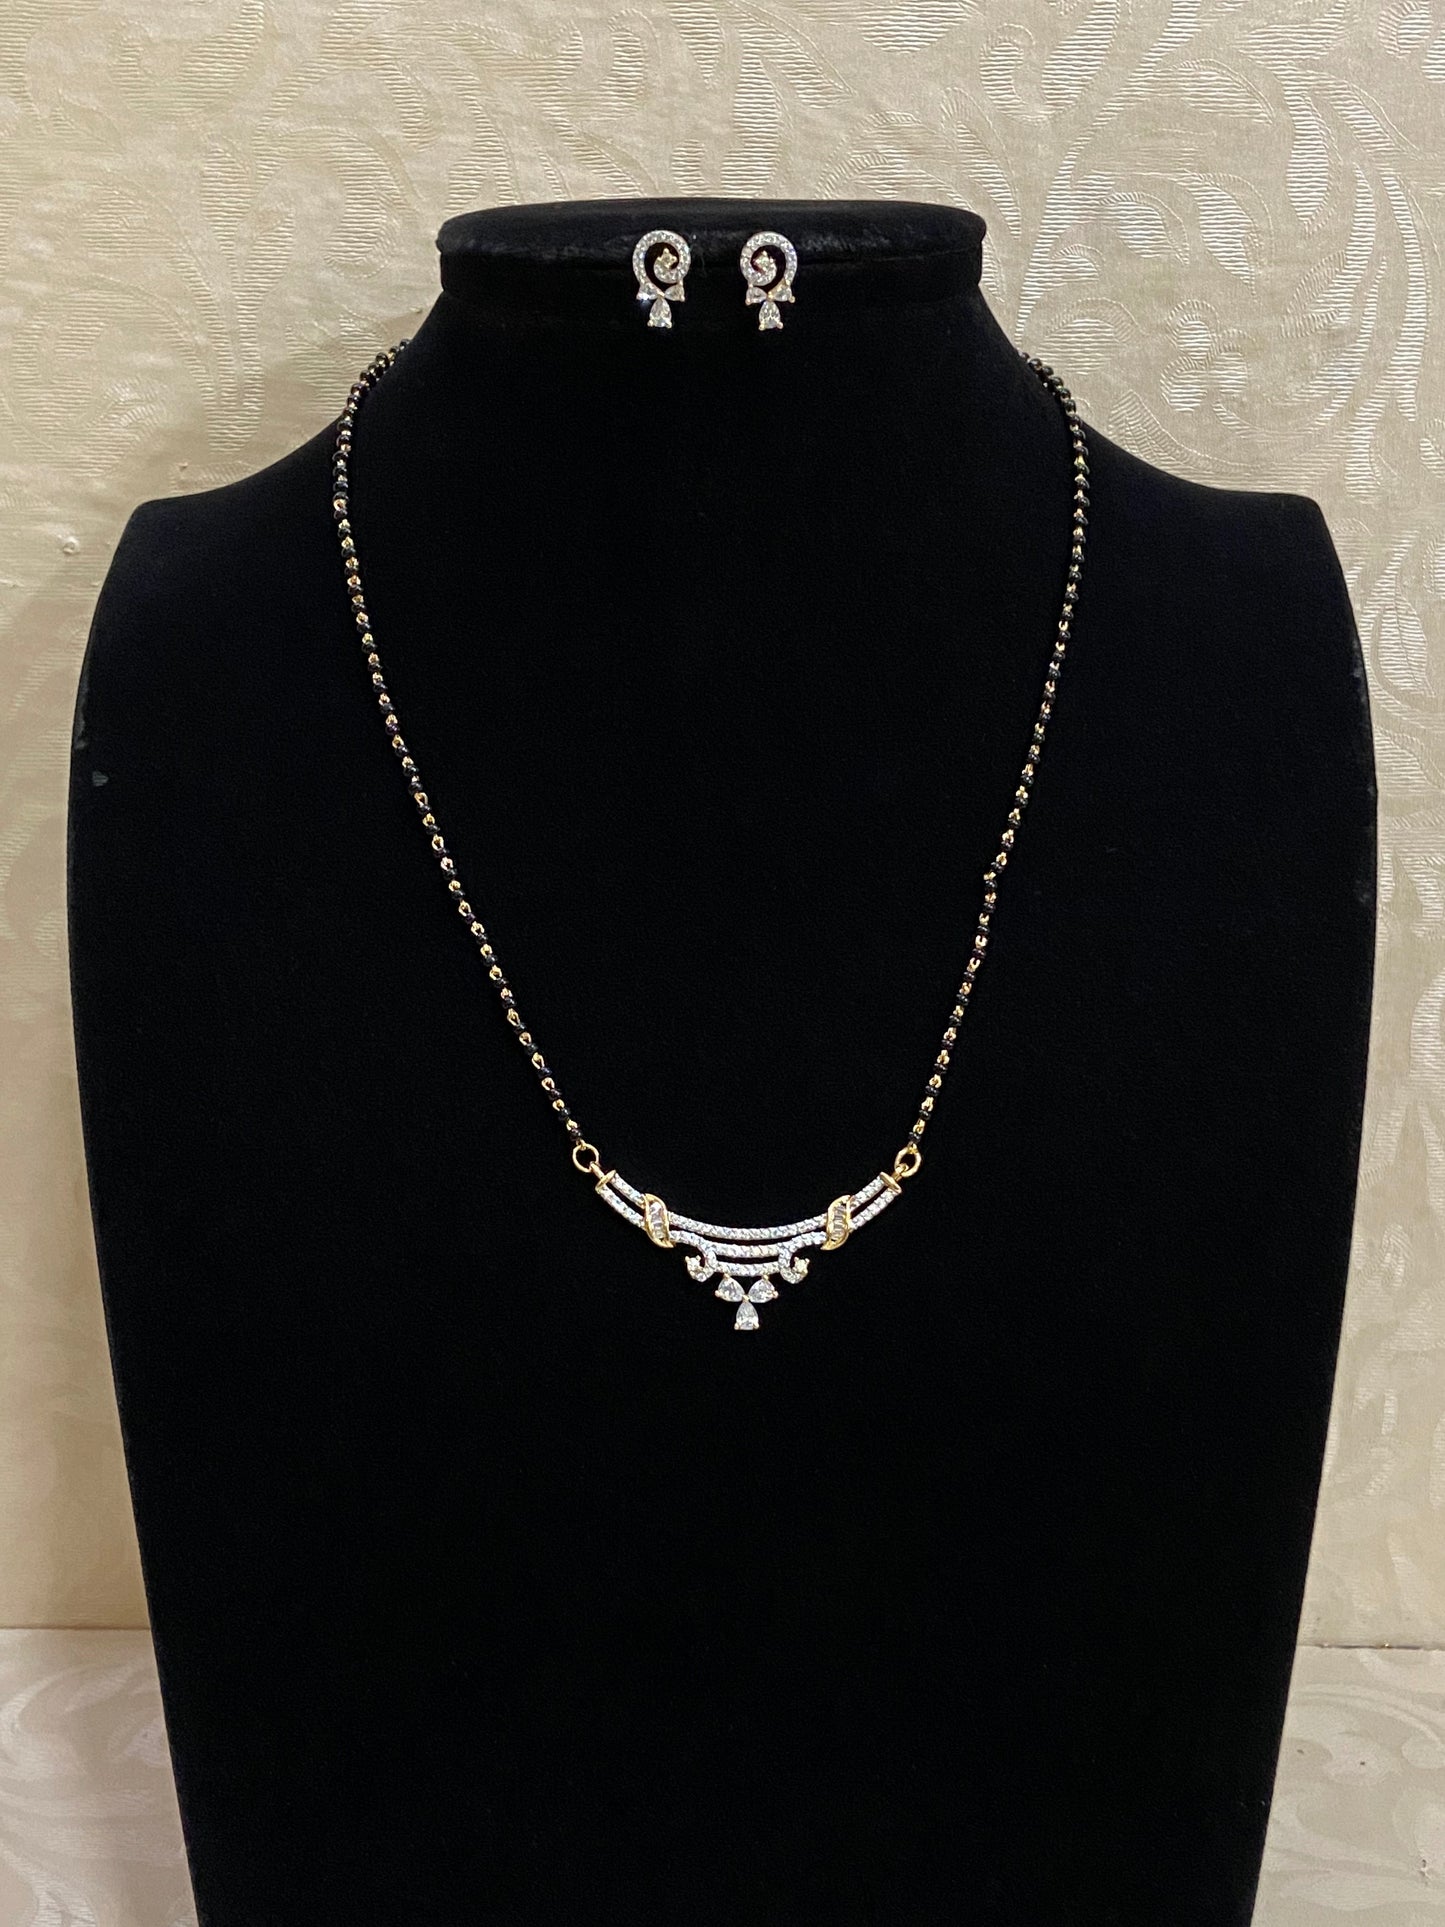 AD pendant mangalsutra | black beads necklace